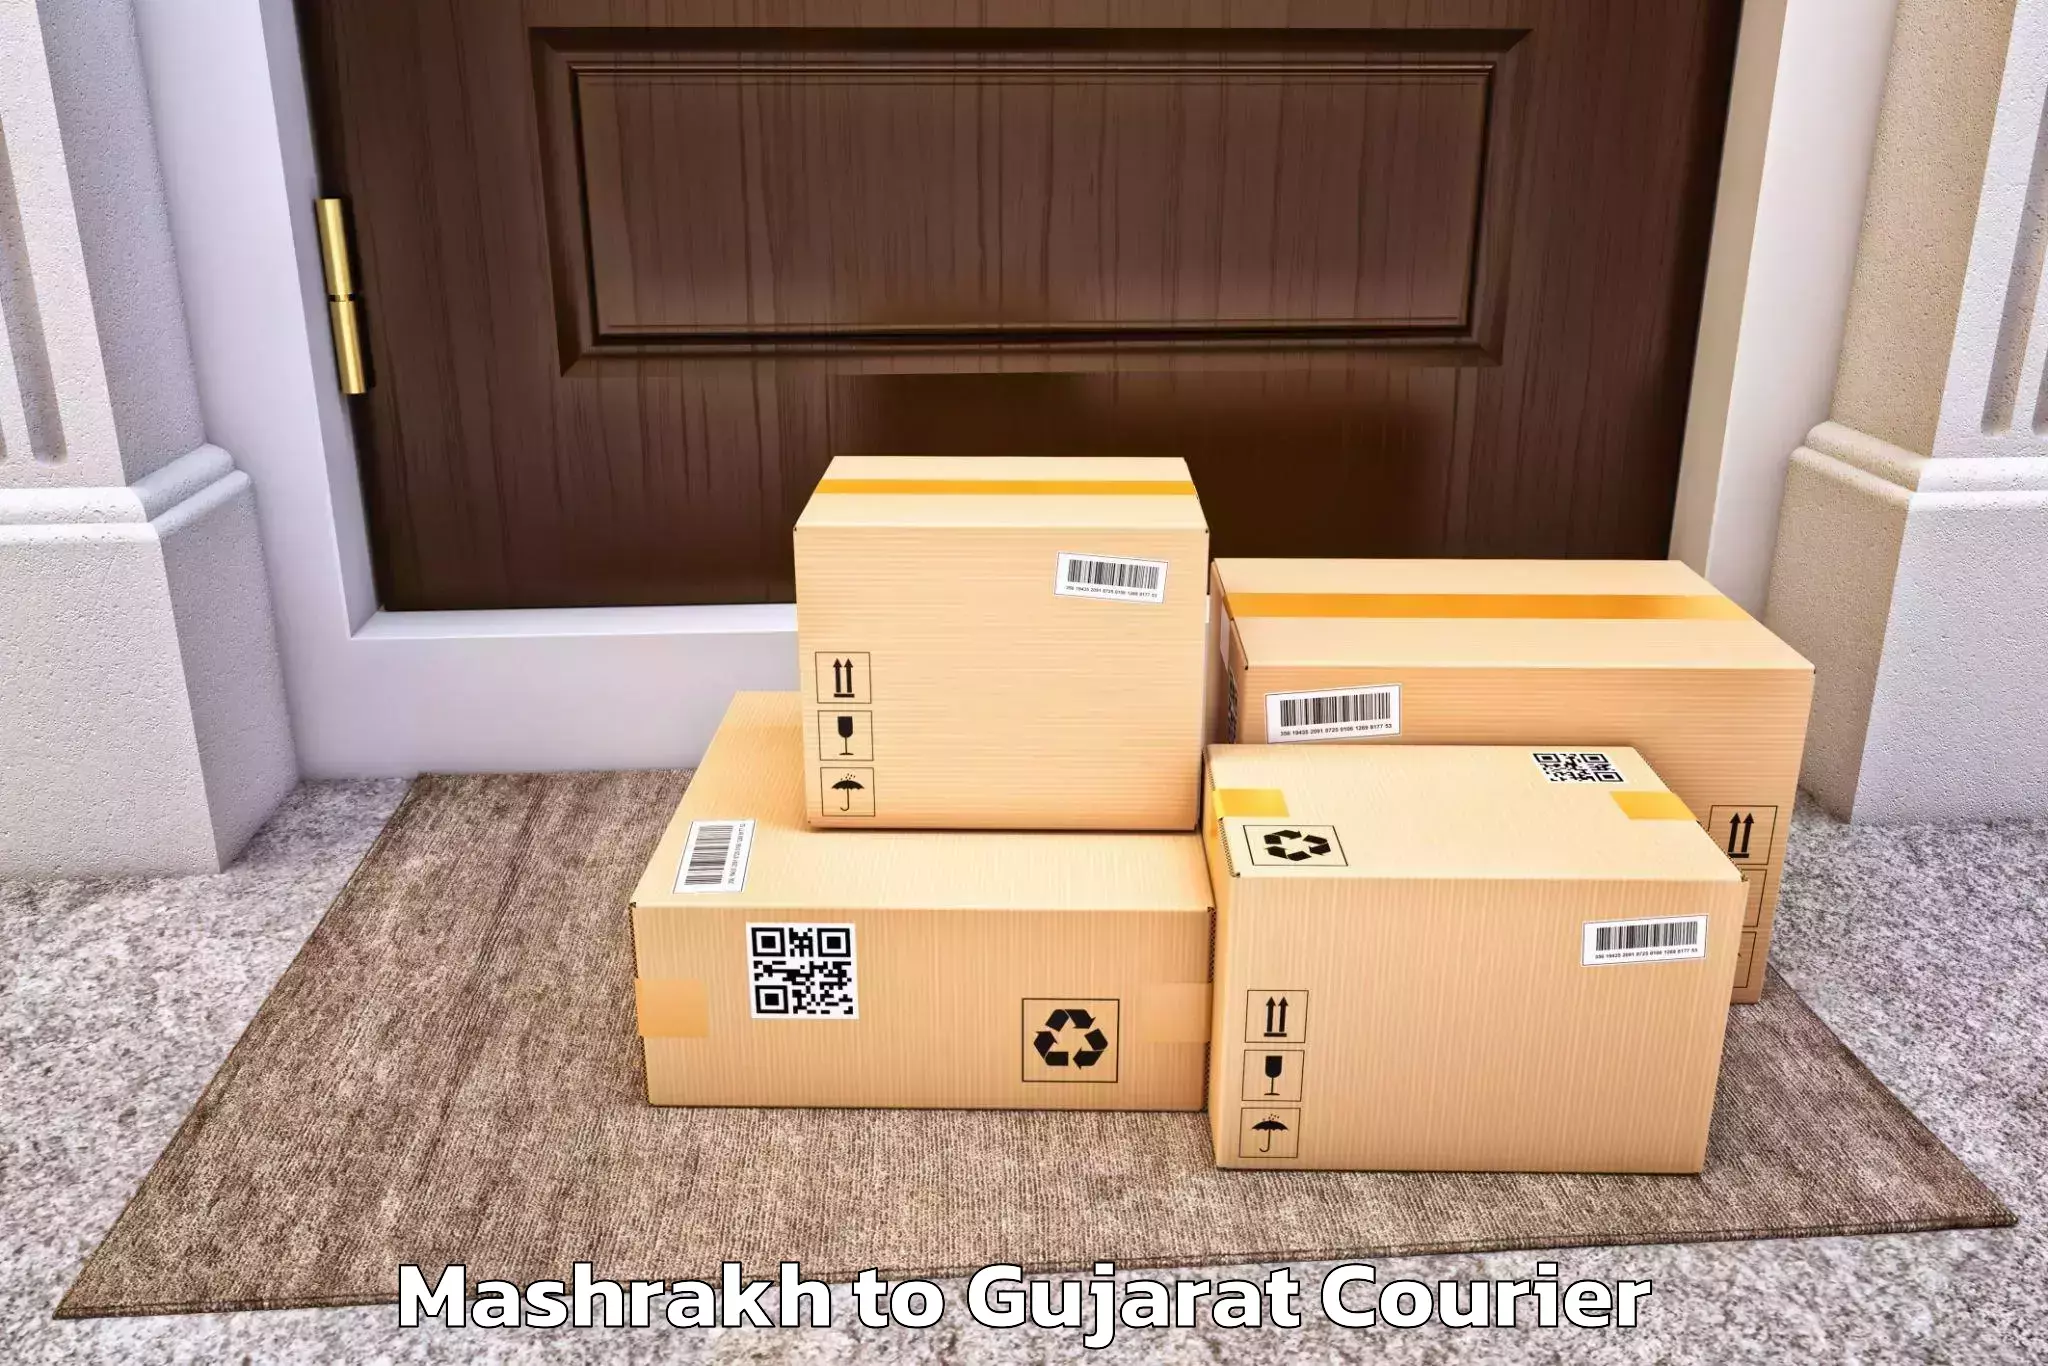 Moving and storage services Mashrakh to Gujarat